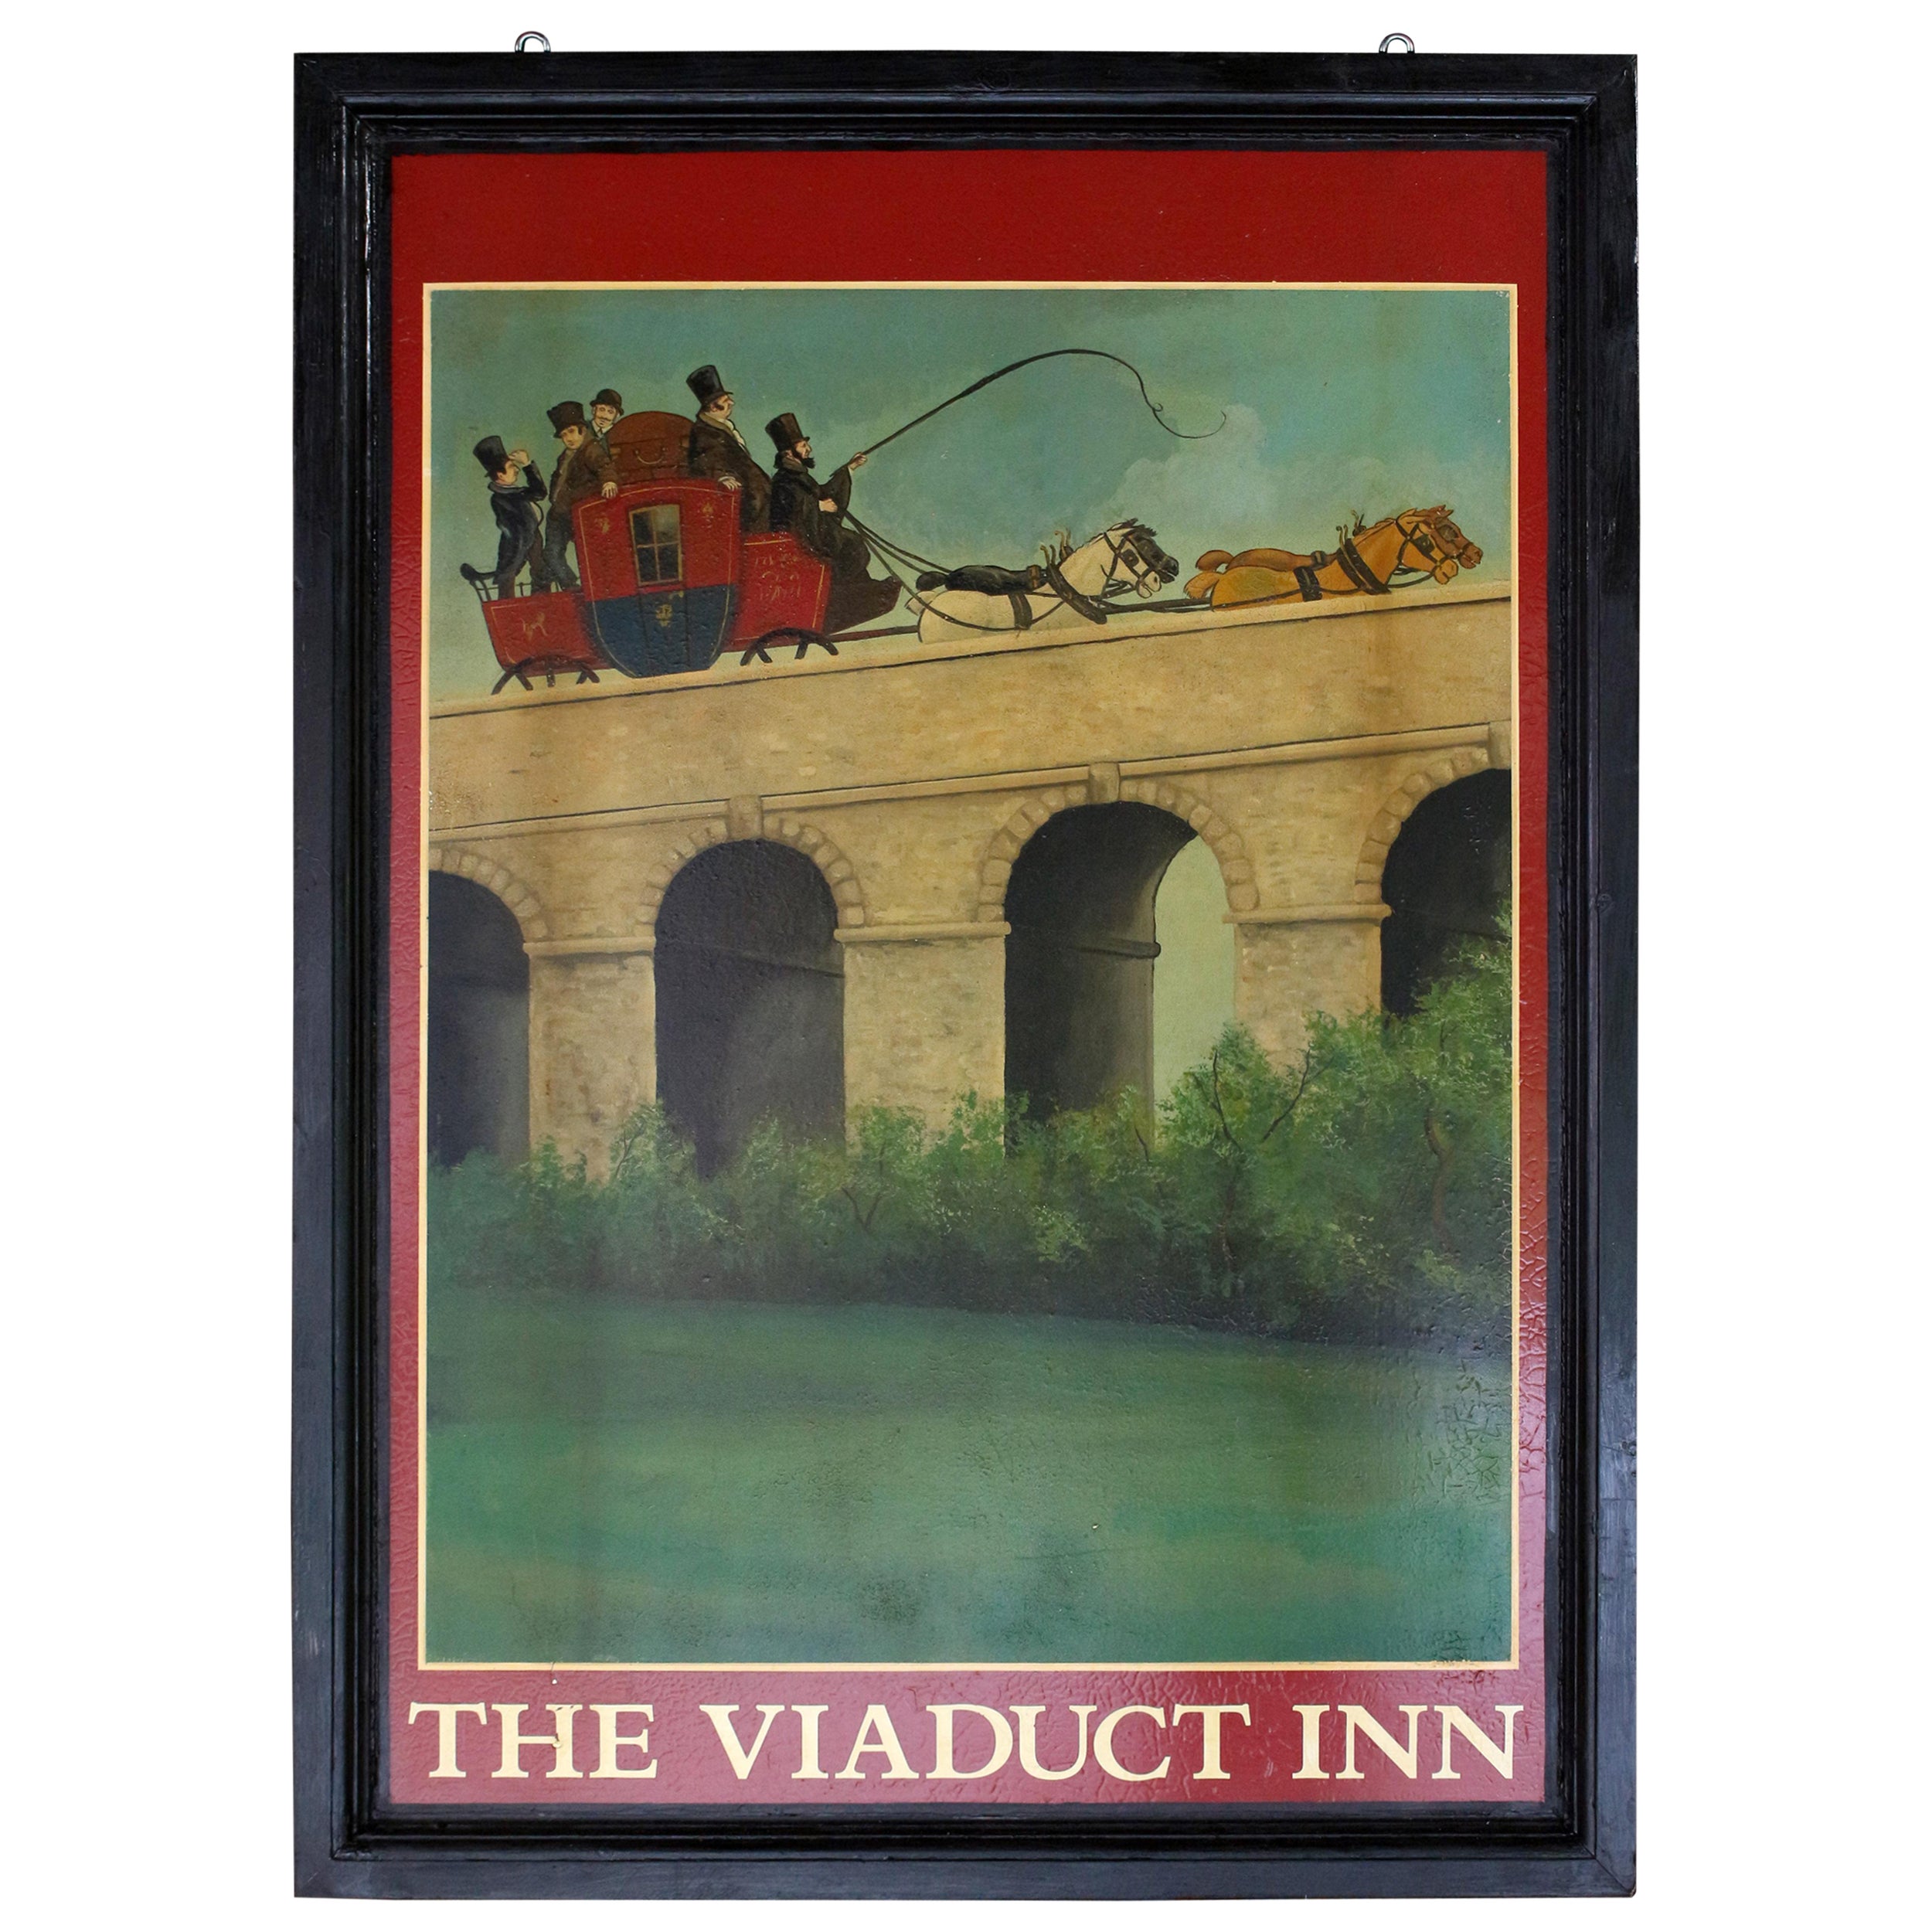 English Pub Sign for "The Viaduct Inn"